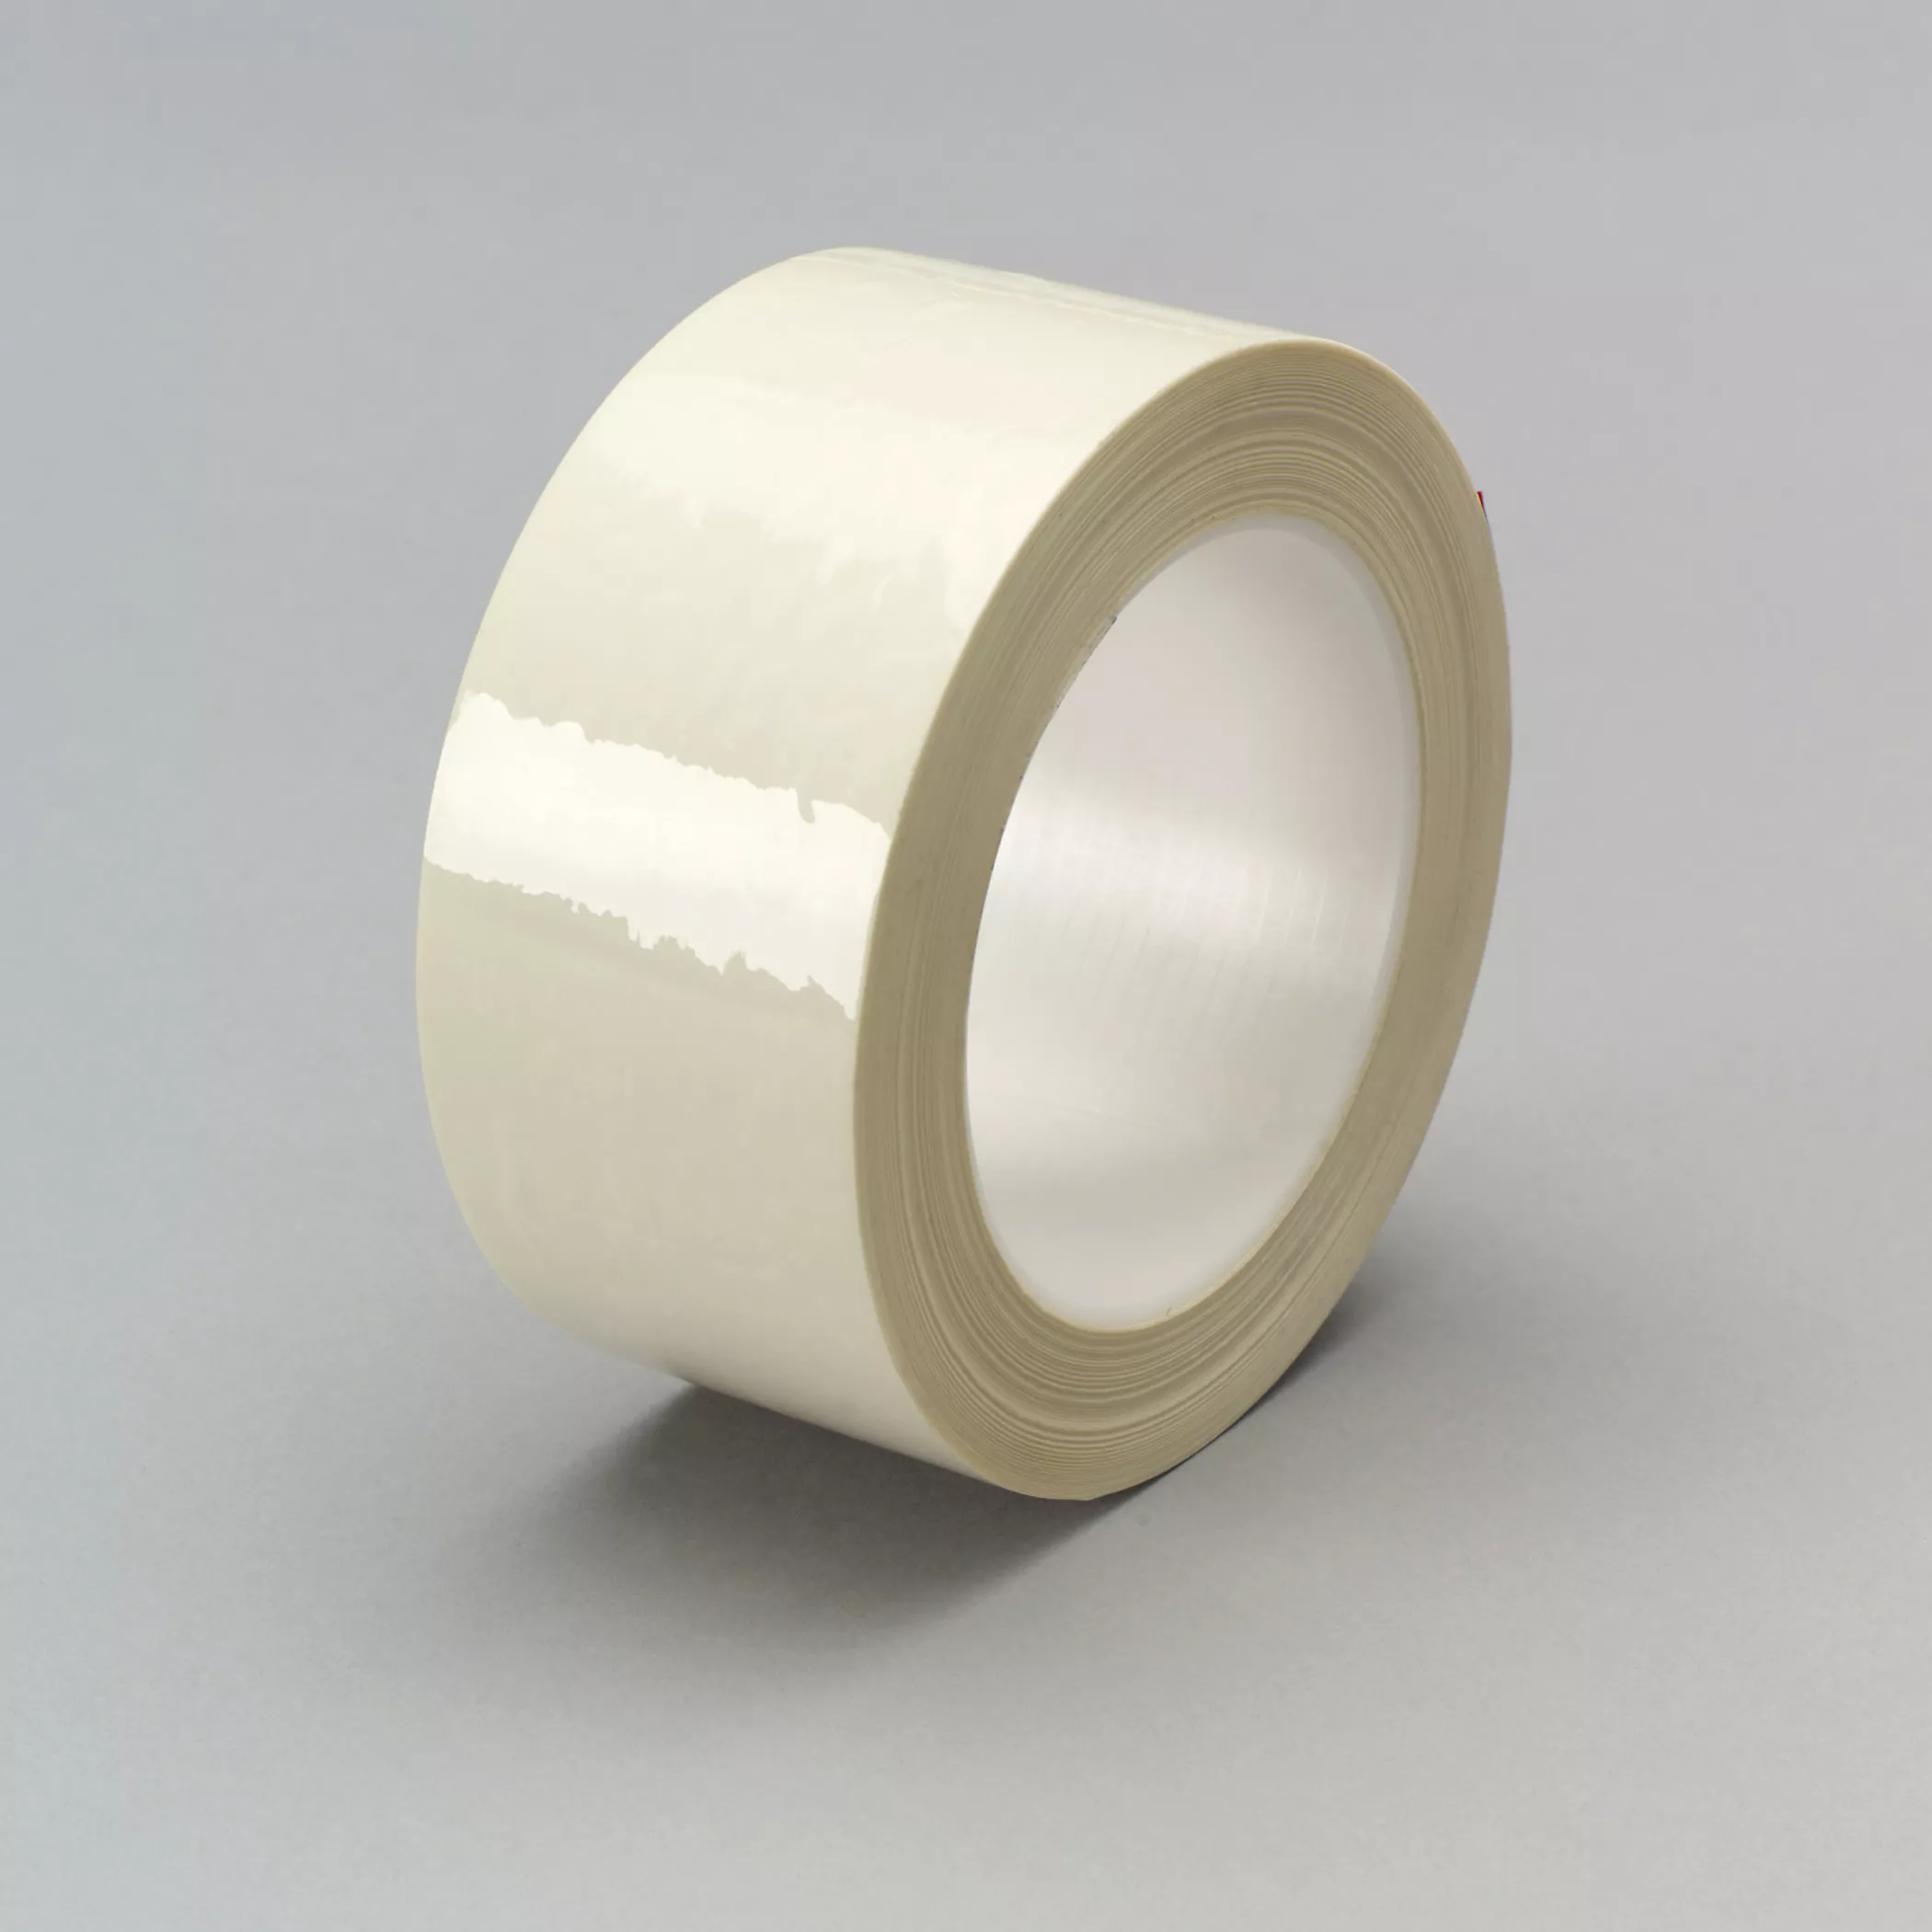 3M™ High Temperature Nylon Film Tape 855, White, 3 in x 72 yd, 3.6 mil,
12 Roll/Case